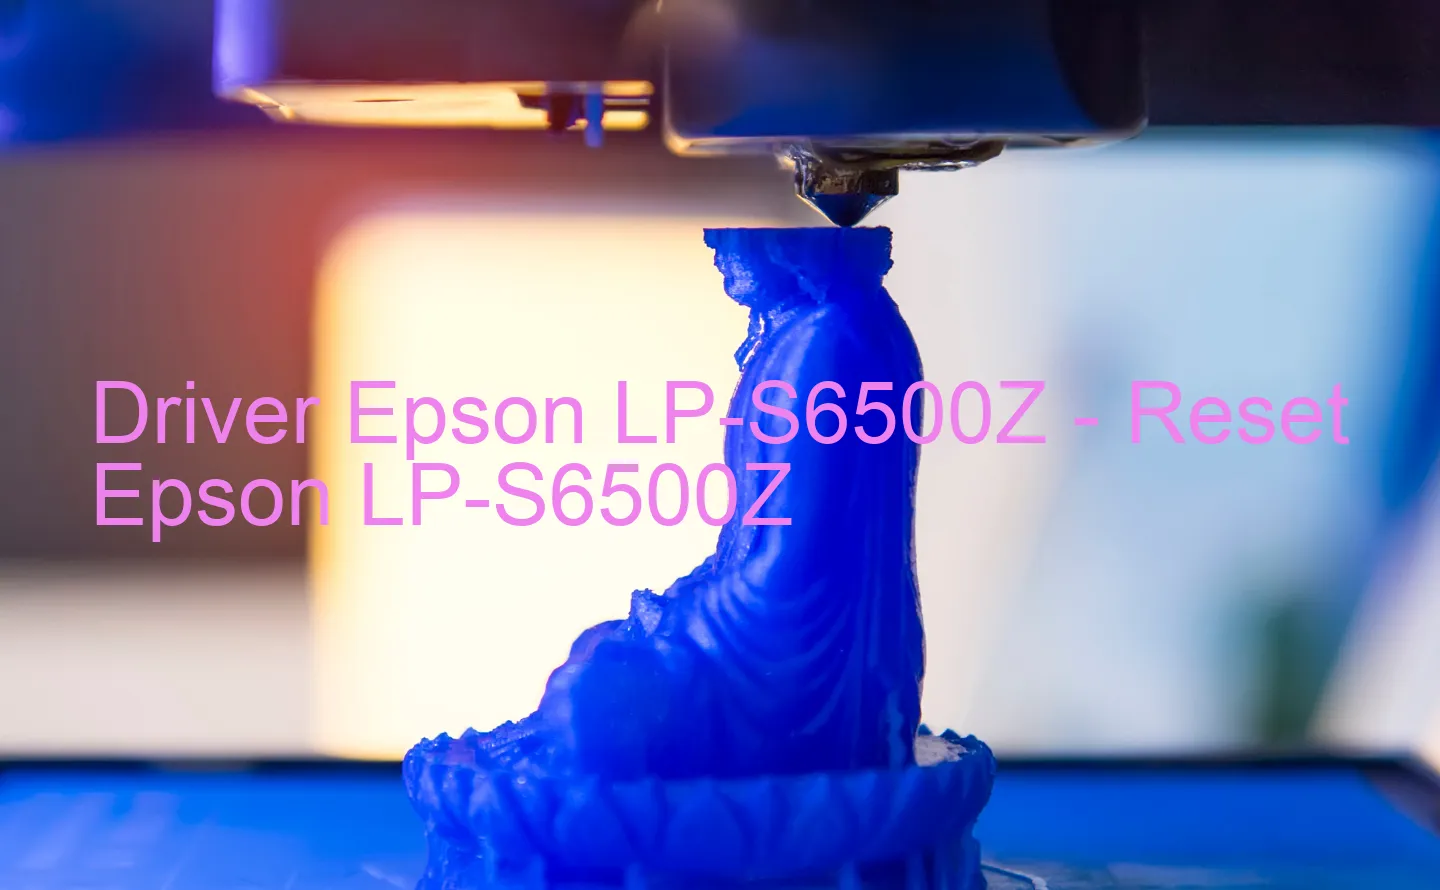 Epson LP-S6500Zのドライバー、Epson LP-S6500Zのリセットソフトウェア